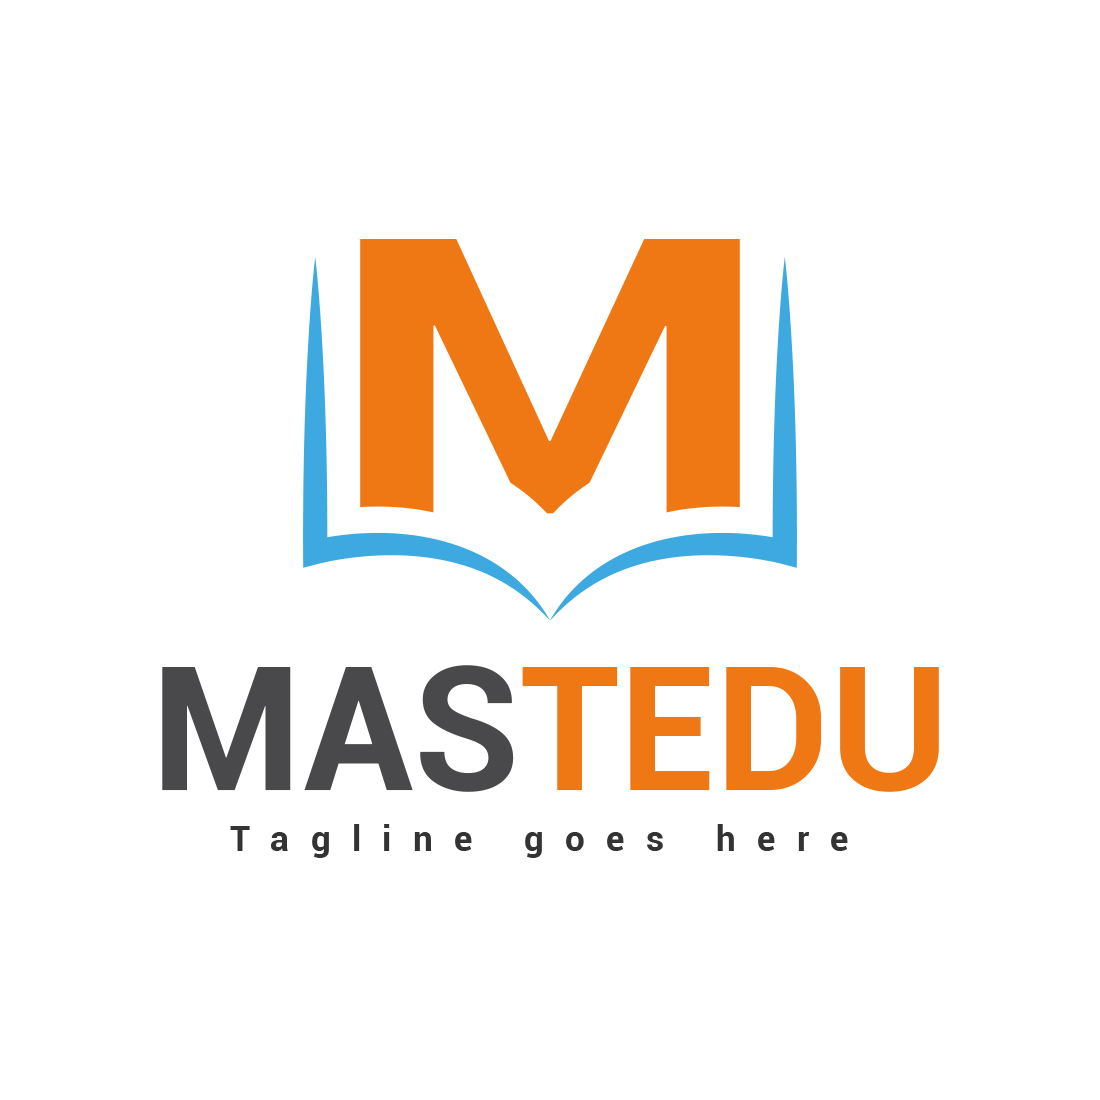 Letter M Educational logo design cover image.